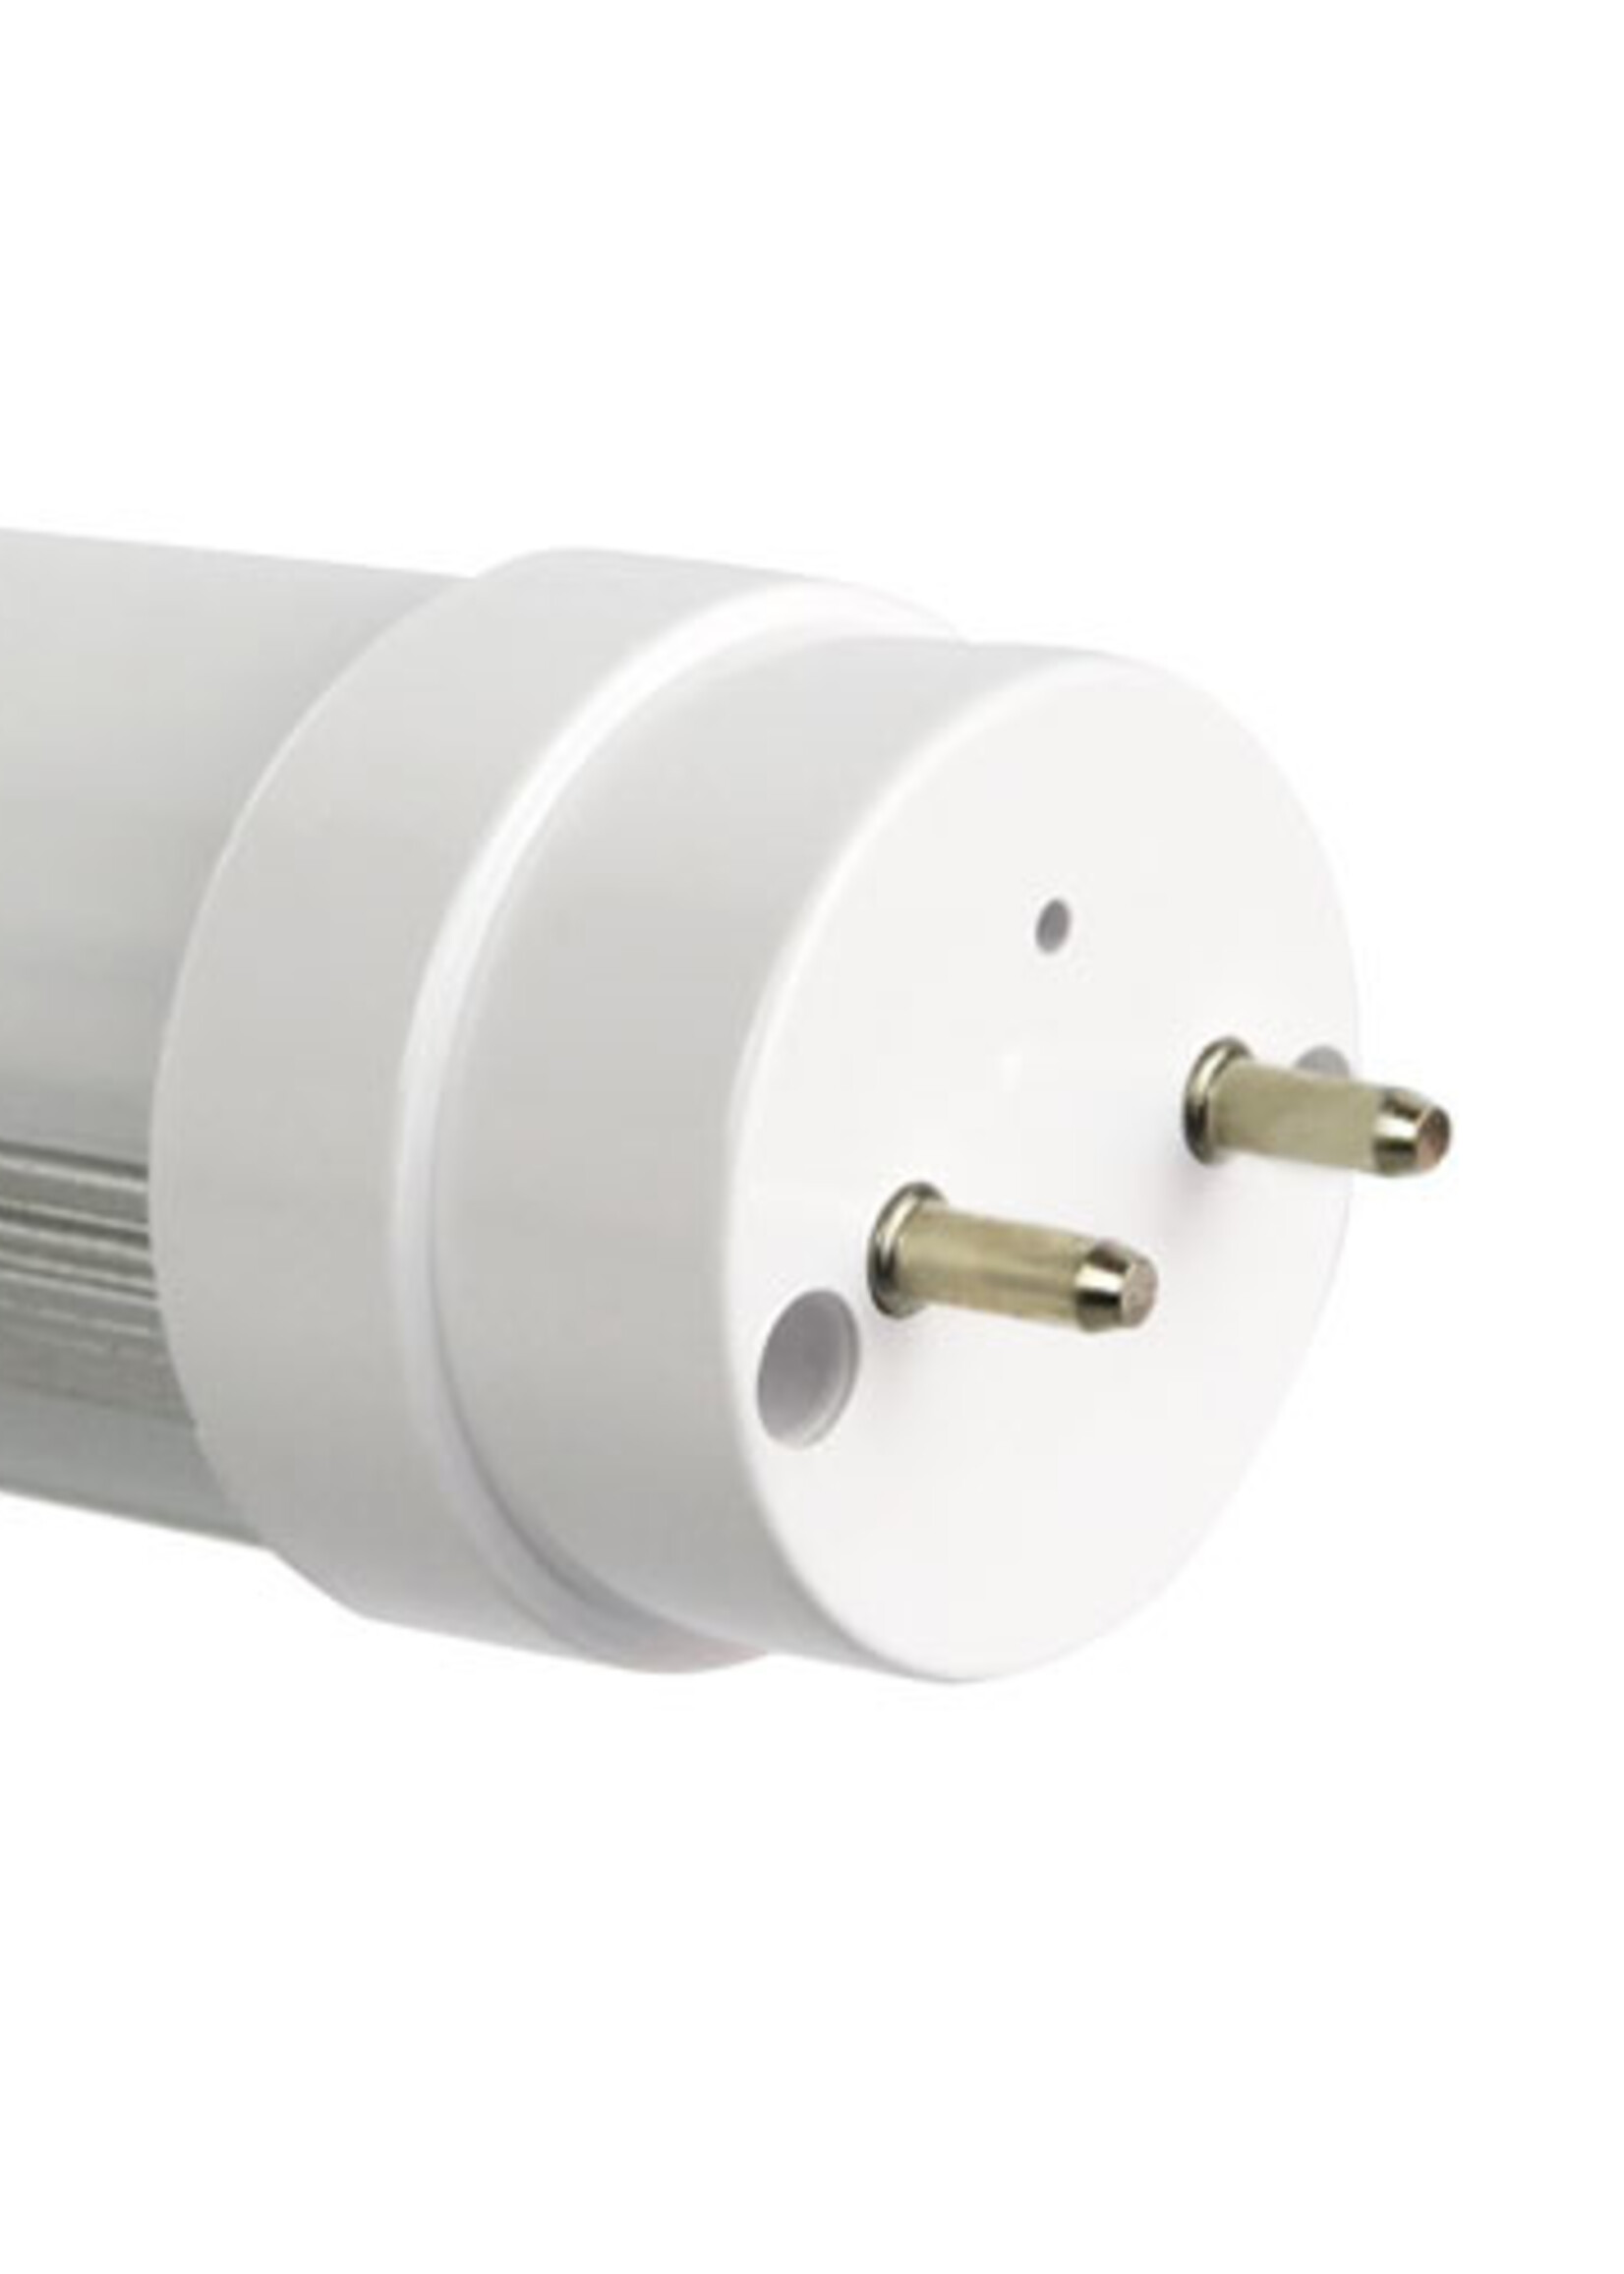 LEDWINKEL-Online LED Tube Light T8 60cm 9W 140lm/W - Pro High lumen